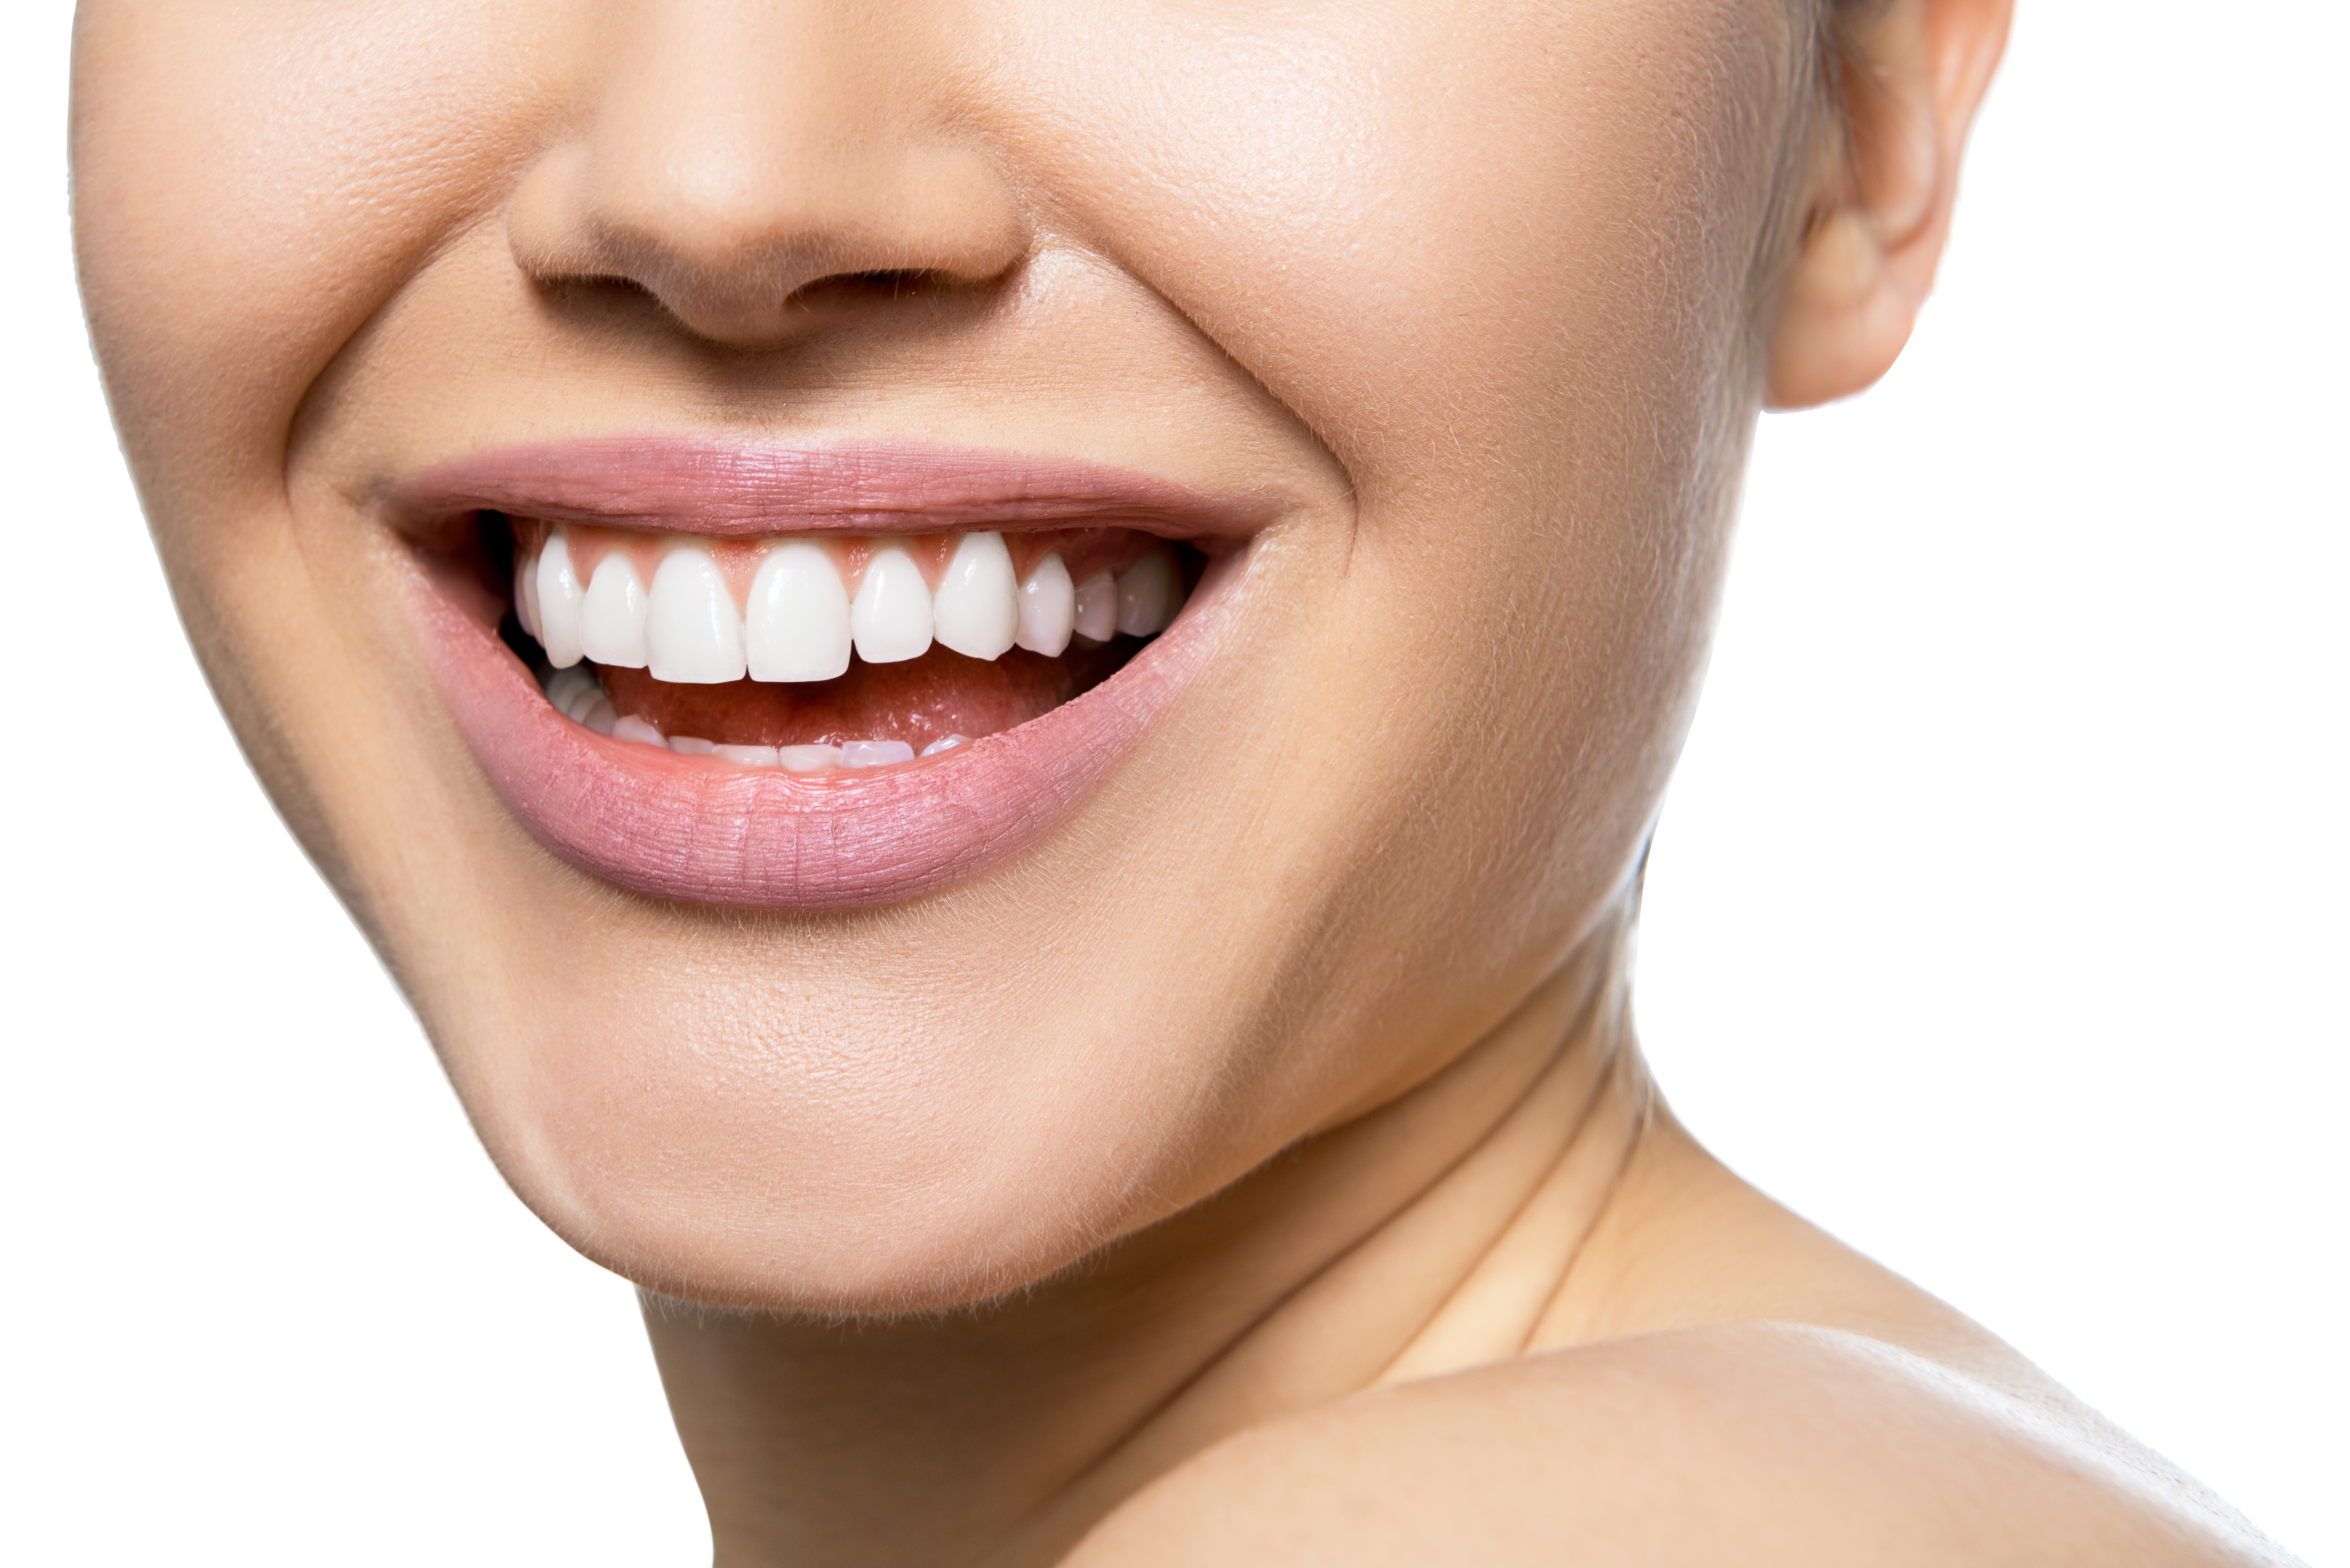 Keeping teeth and gums healthy